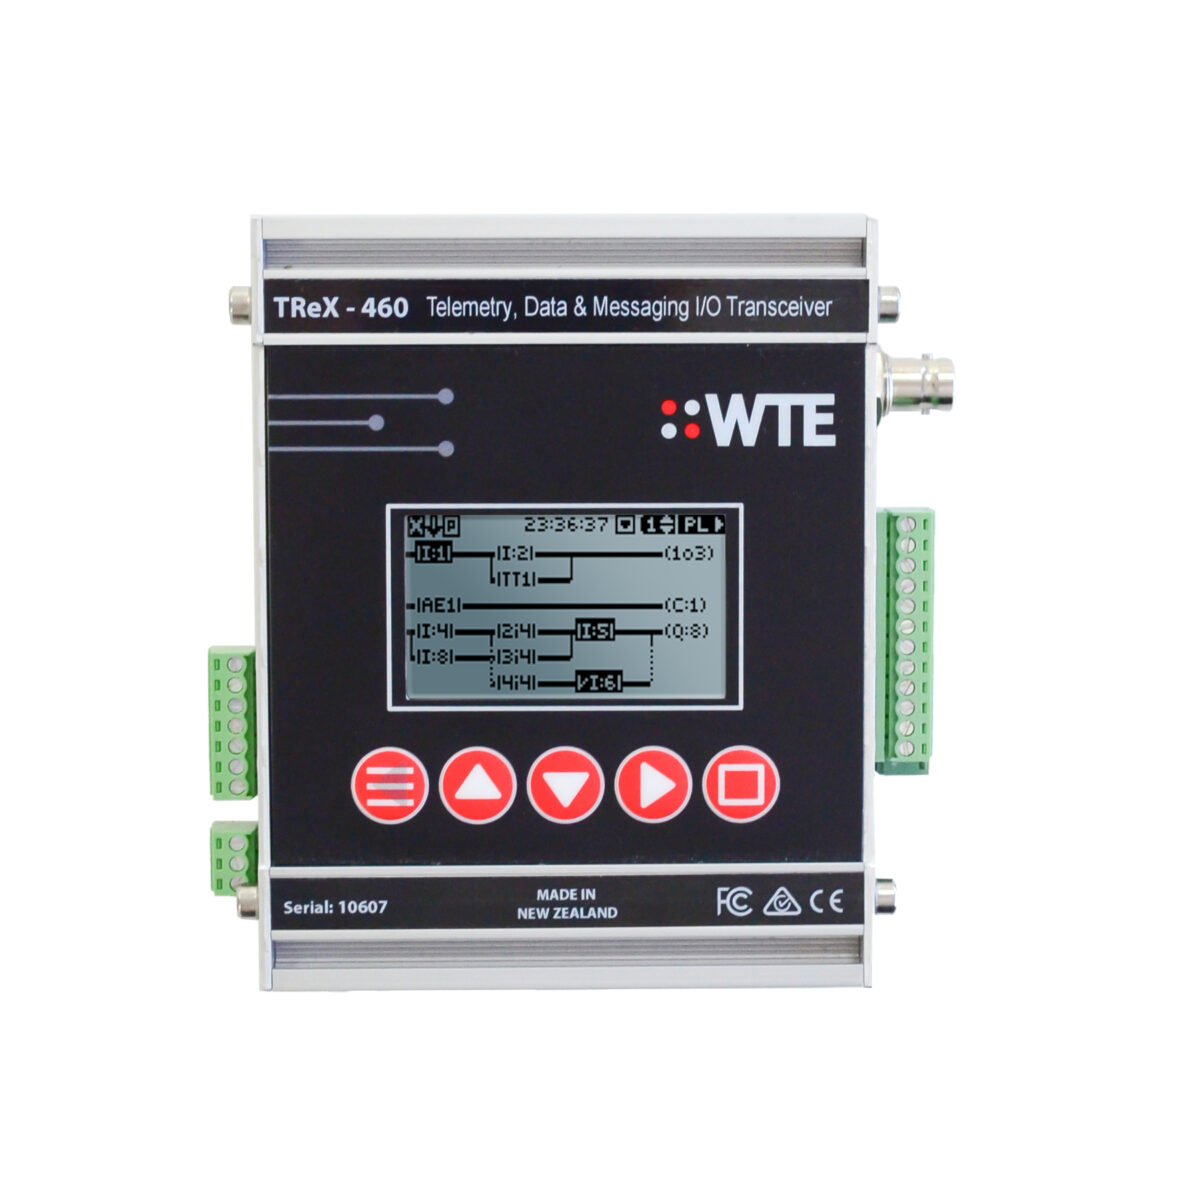 TReX 460 AlarmCall Pro+ 4W BackUp Ethernet Serial USB Compatibele Data Transceiver POCSAG (pagers) Nachrichtenbildschirm